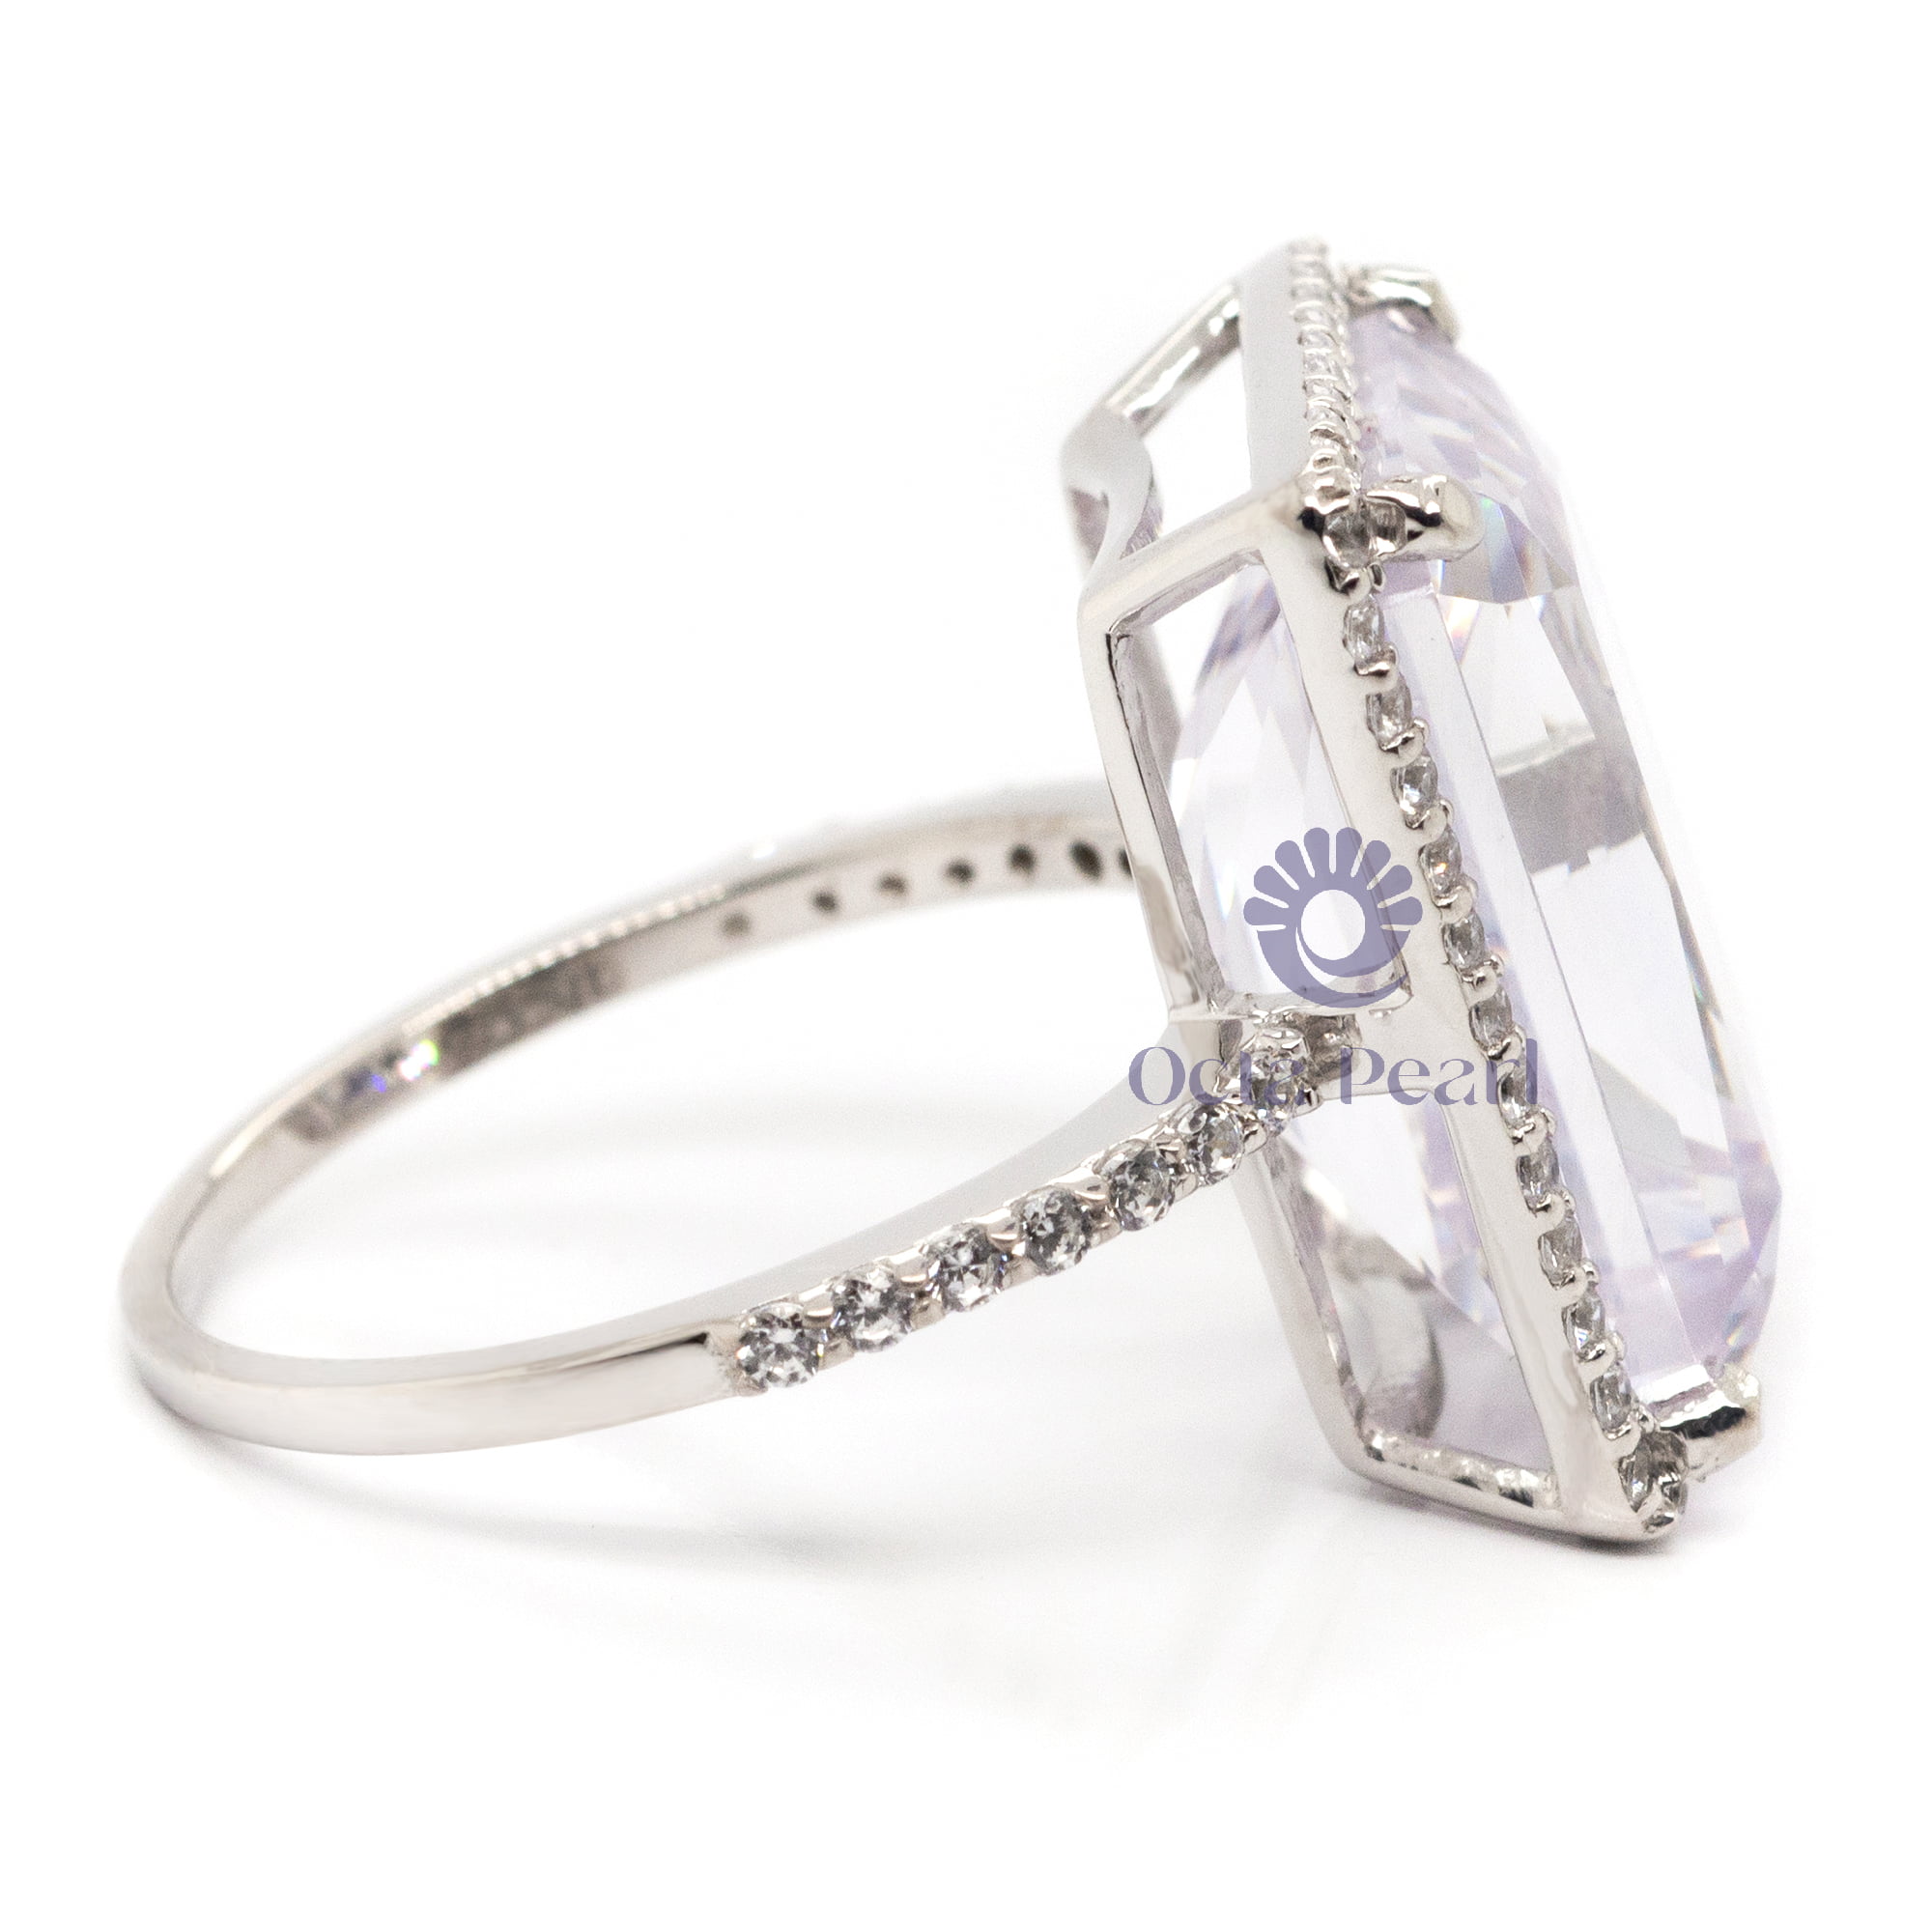 18x13 MM Radiant Cut Or Round Cut White CZ Stone Halo Women's Wedding Anniversary Gift Ring